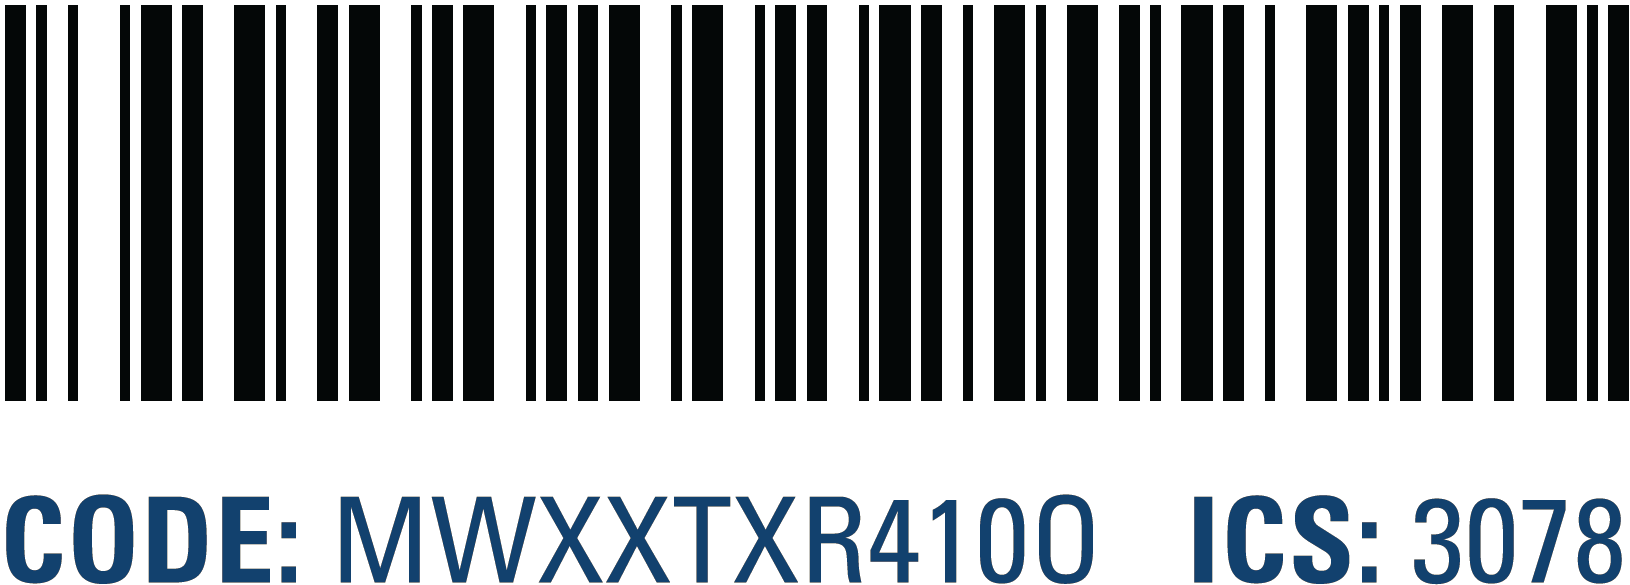 T5_CW_Barcode_MWDRTXRA5DO P10 SMS $10 Off